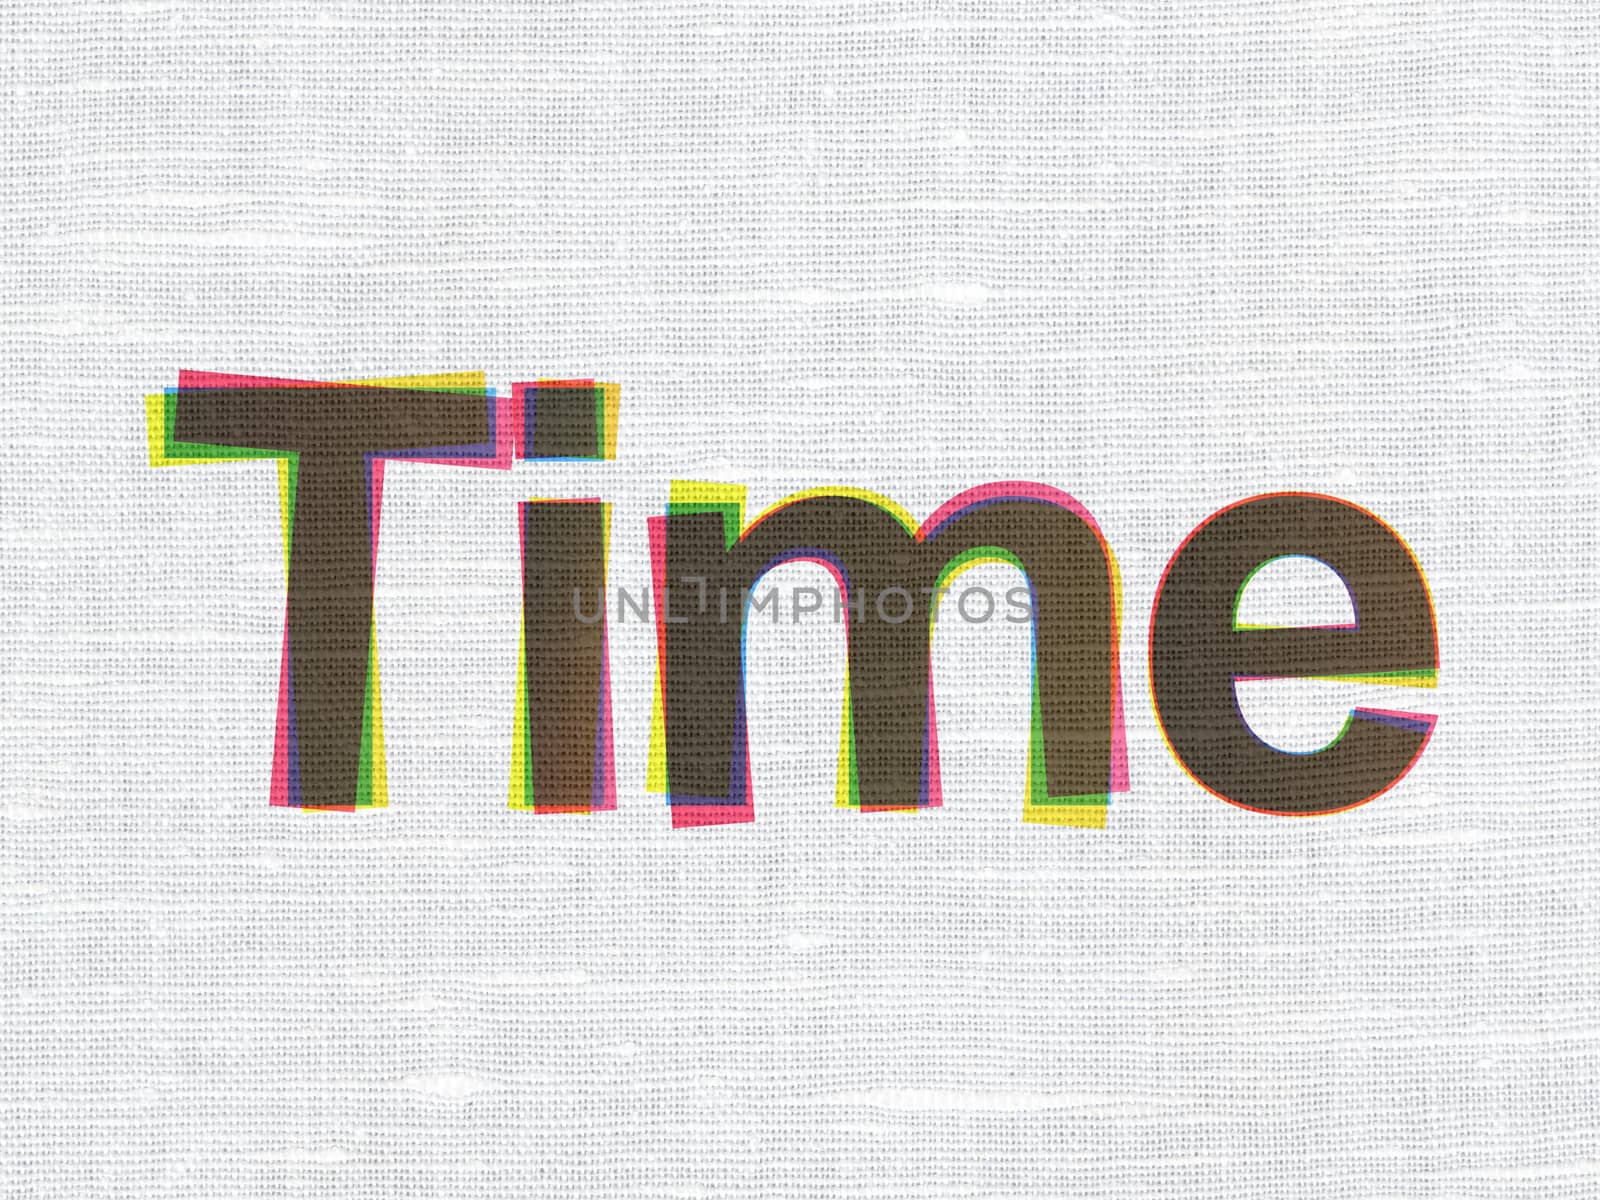 Timeline concept: CMYK Time on linen fabric texture background, 3d render